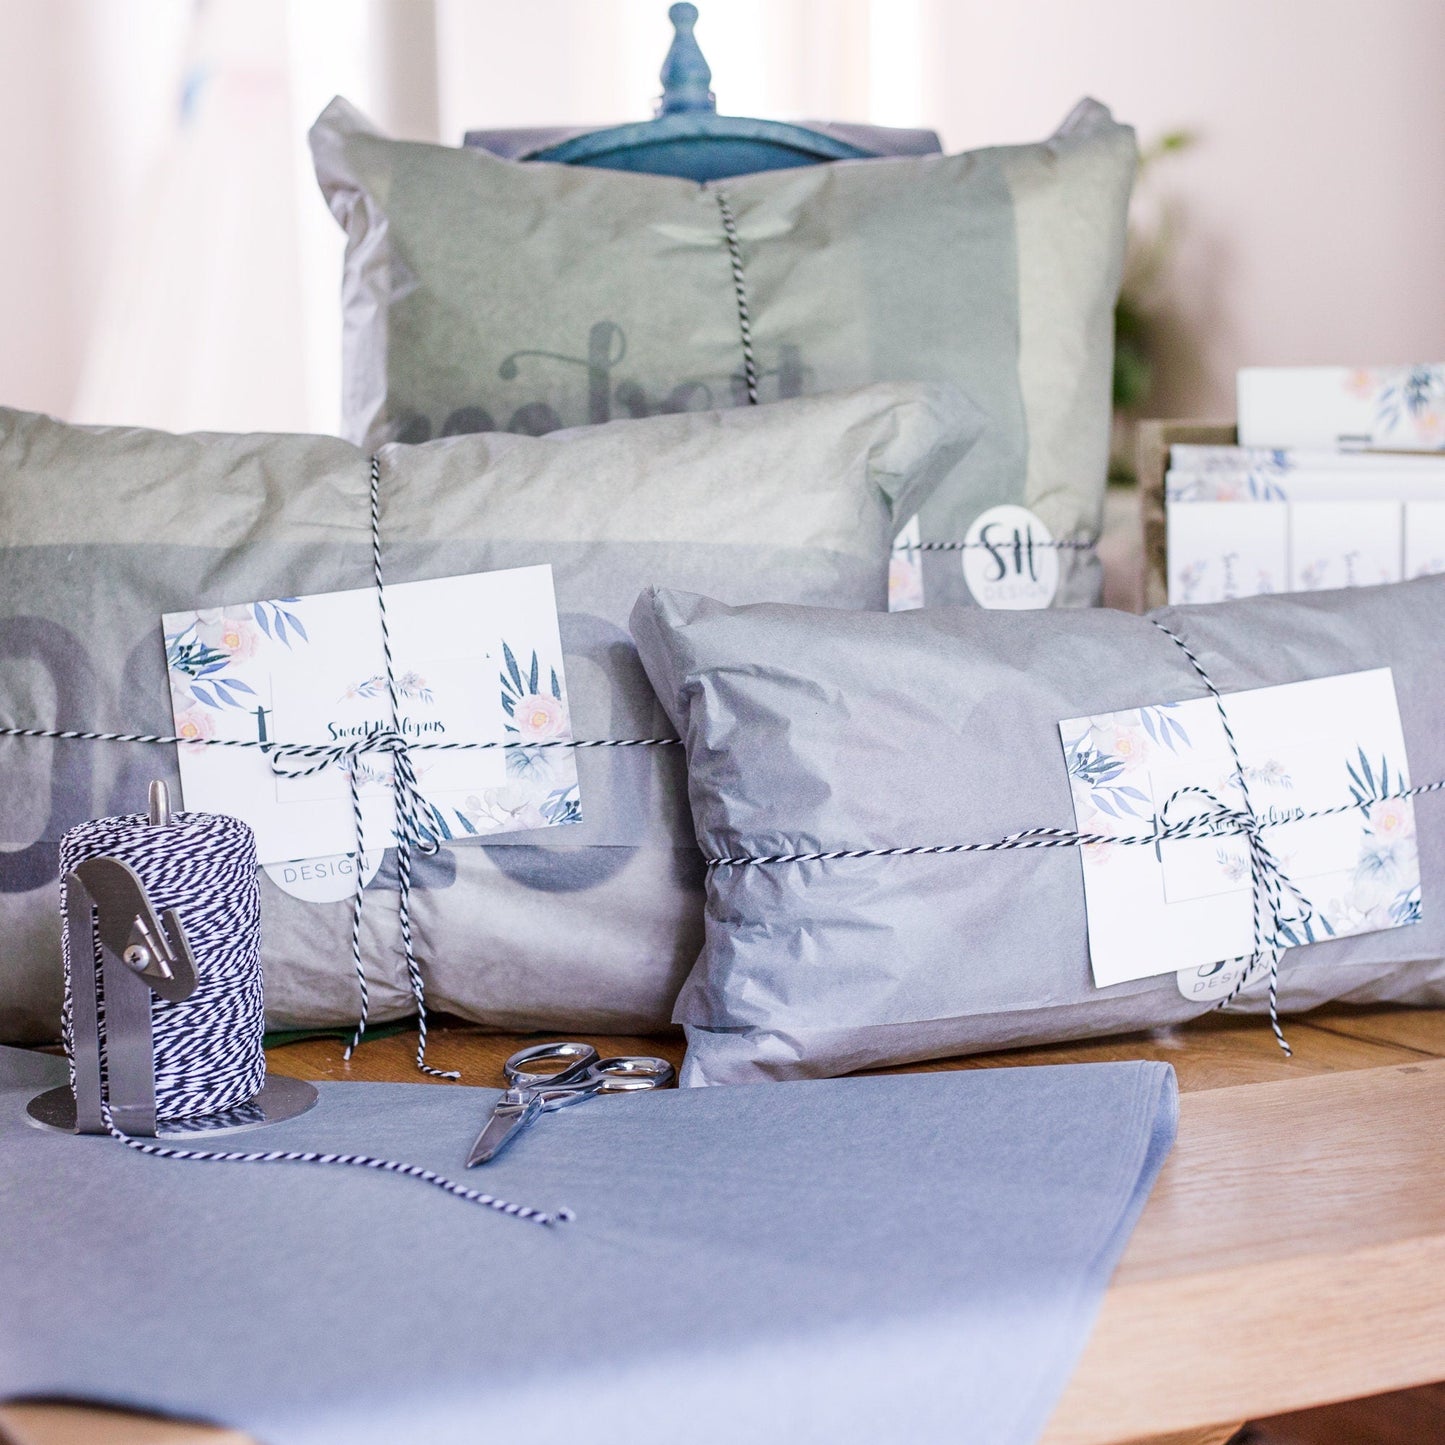 Home Sweet Home Coordinates | New Home Housewarming Gift | New Couple Gift | Latitude Longitude Pillow | GPS Coordinates | Lat Long Pillow